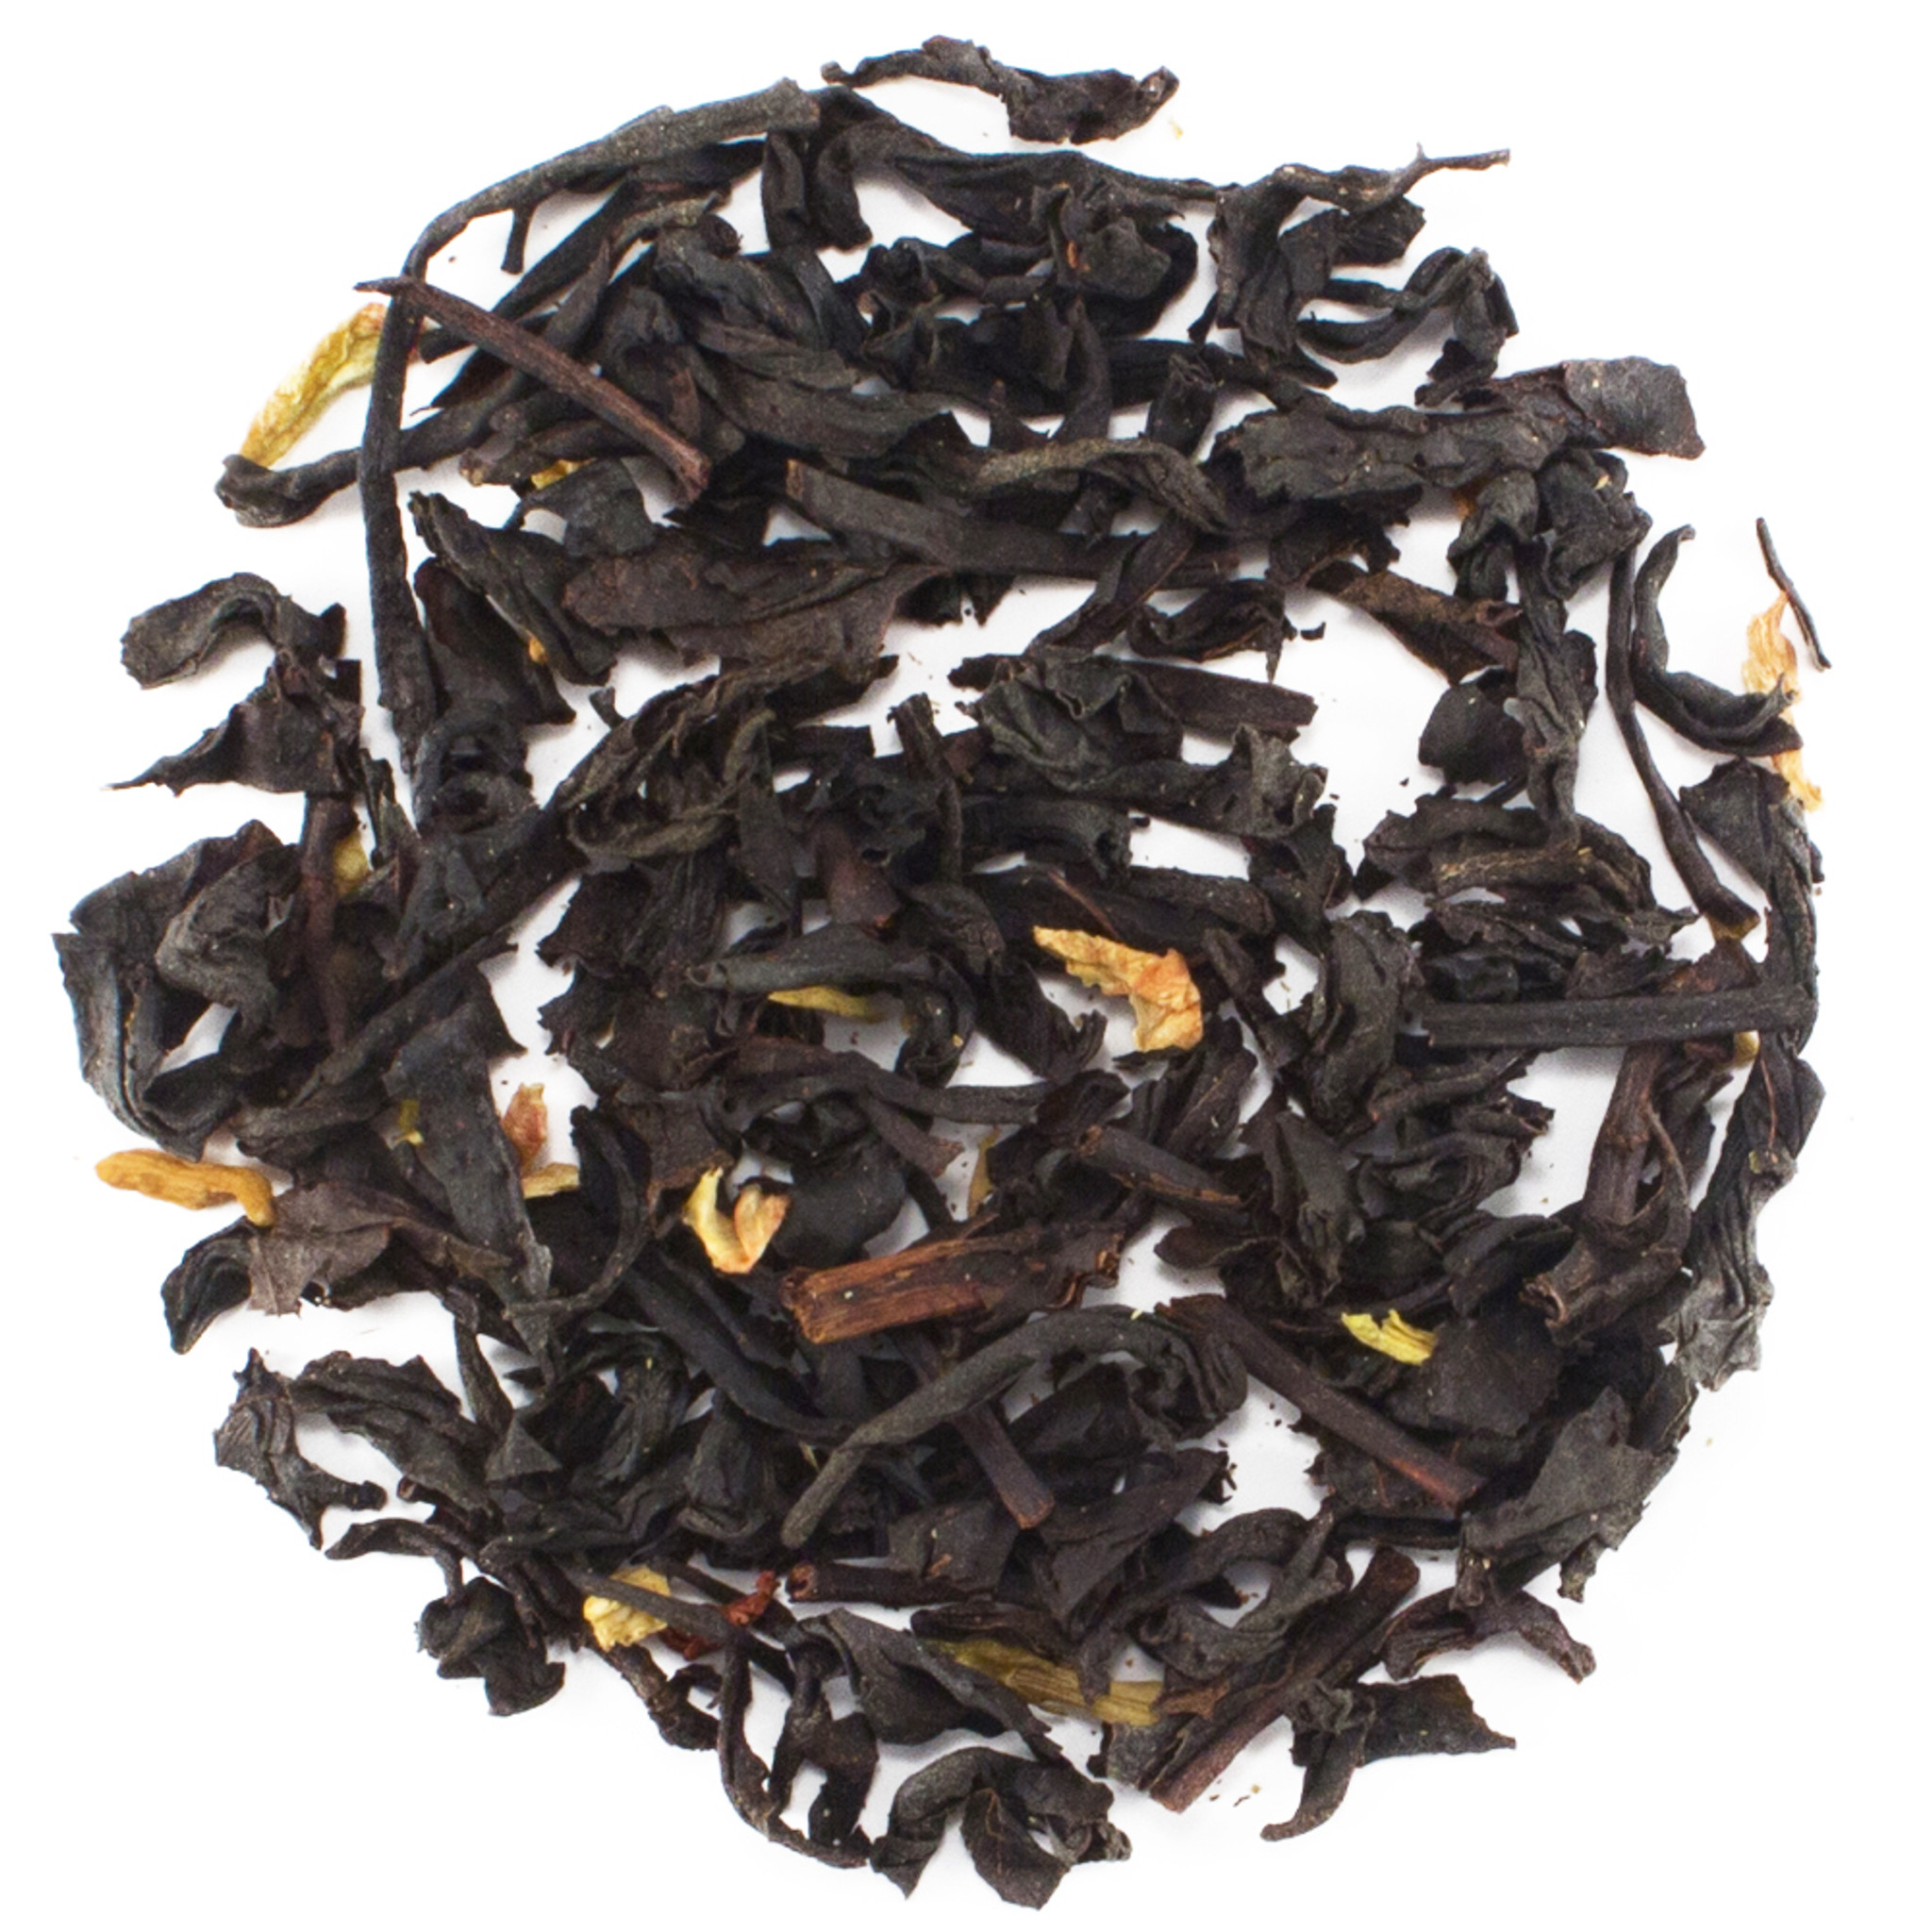 Black tea Babingtons Earl Grey Imperial, 100 g - Coffee Friend